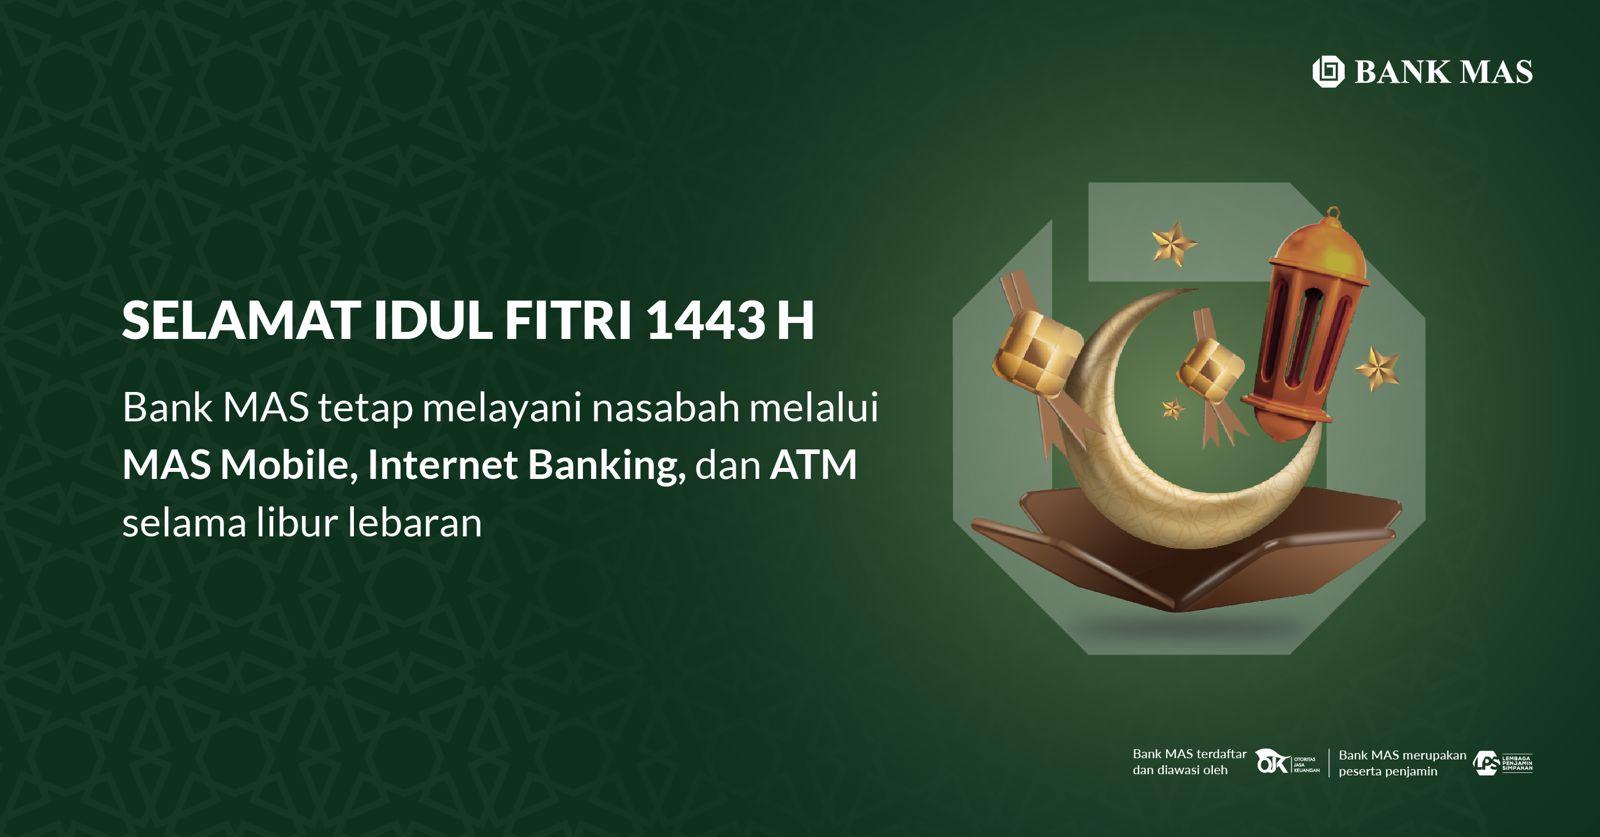 Bank MAS Service Information During Eid Al-Fitr 1443 H 